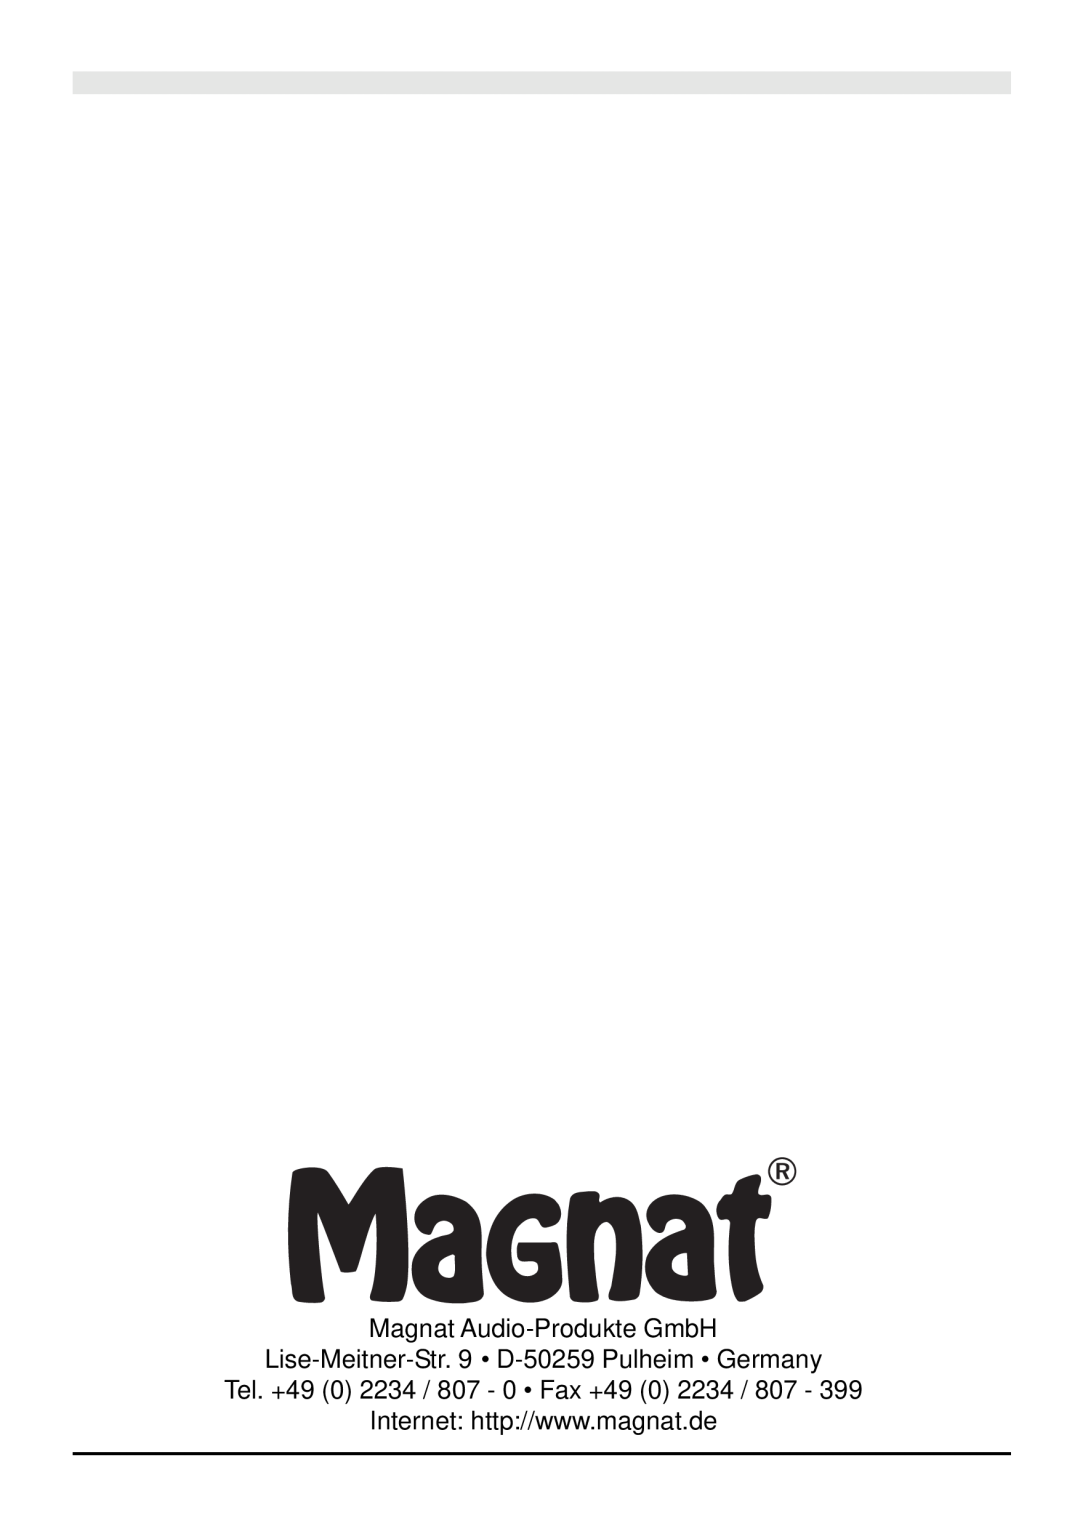 Magnat Audio 316, 694, 216, 213, 163, 102, 132 owner manual Magnat Audio-ProdukteGmbH, Lise-Meitner-Str.9 D-50259Pulheim Germany 